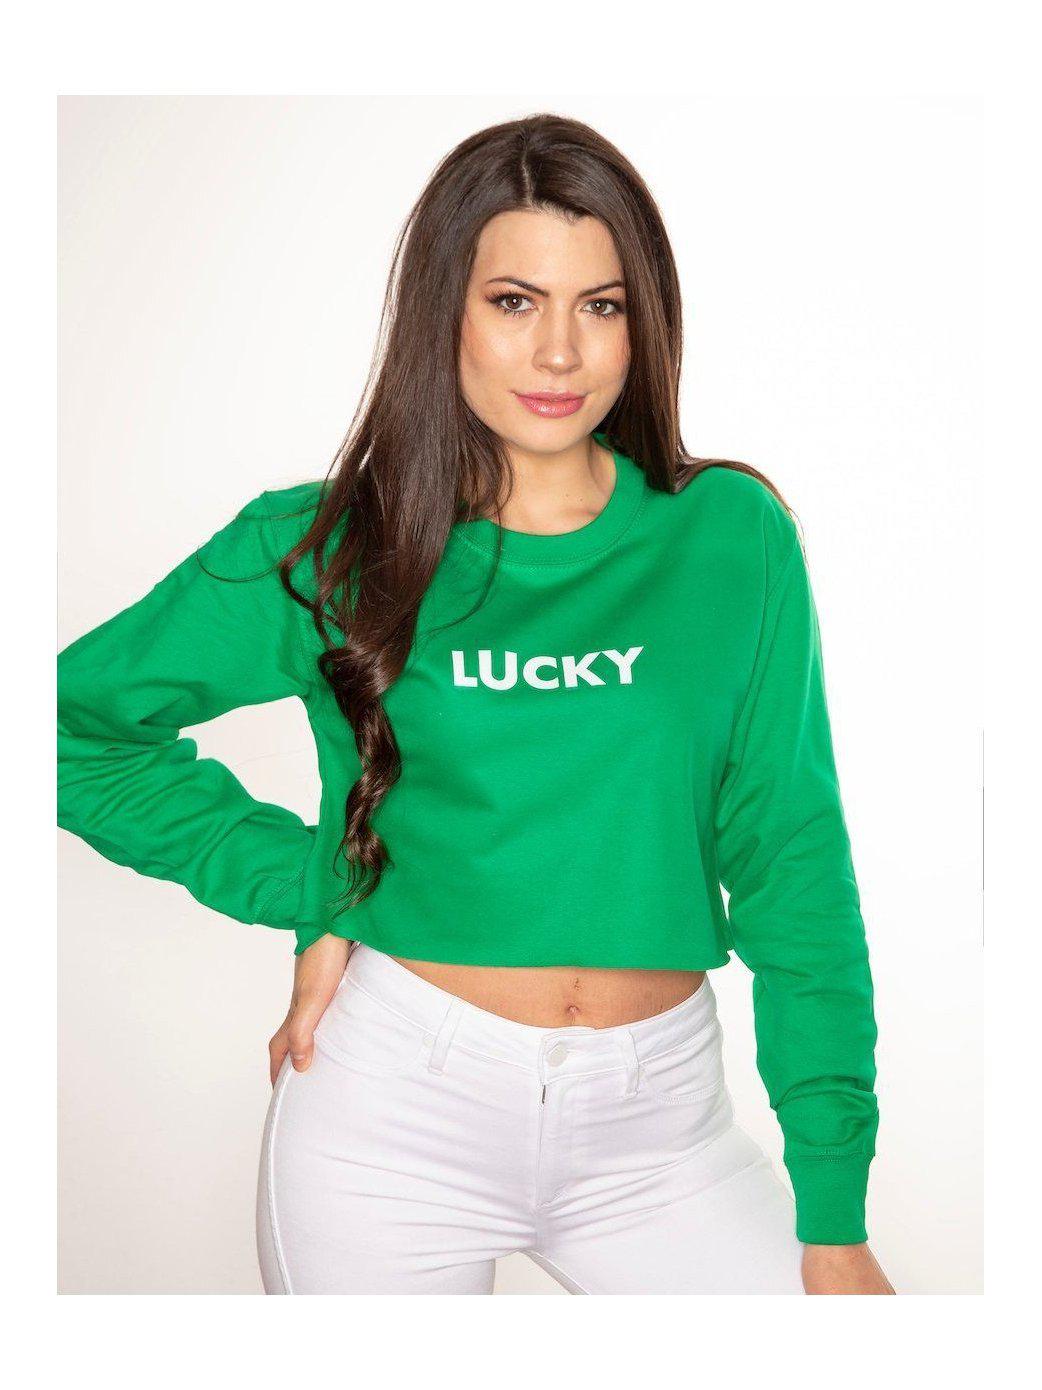 LUCKY cropped sweatshirt in green